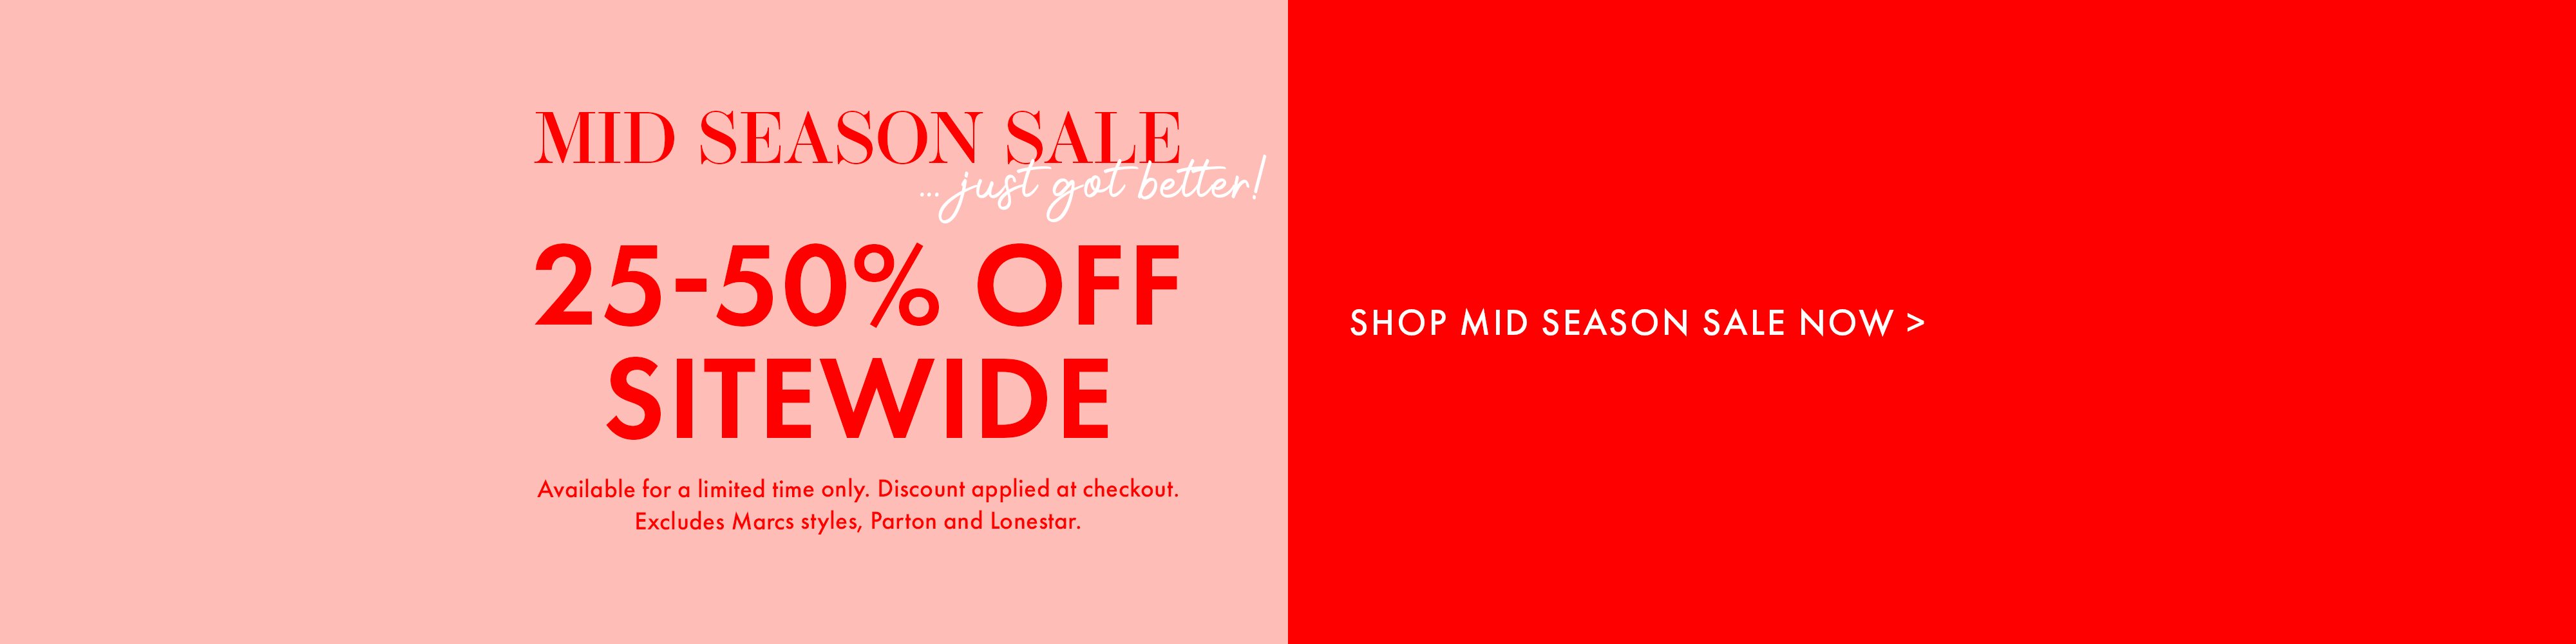 MID SEASON SALE... just got better! Shop 25-50% Off Sitewide Now